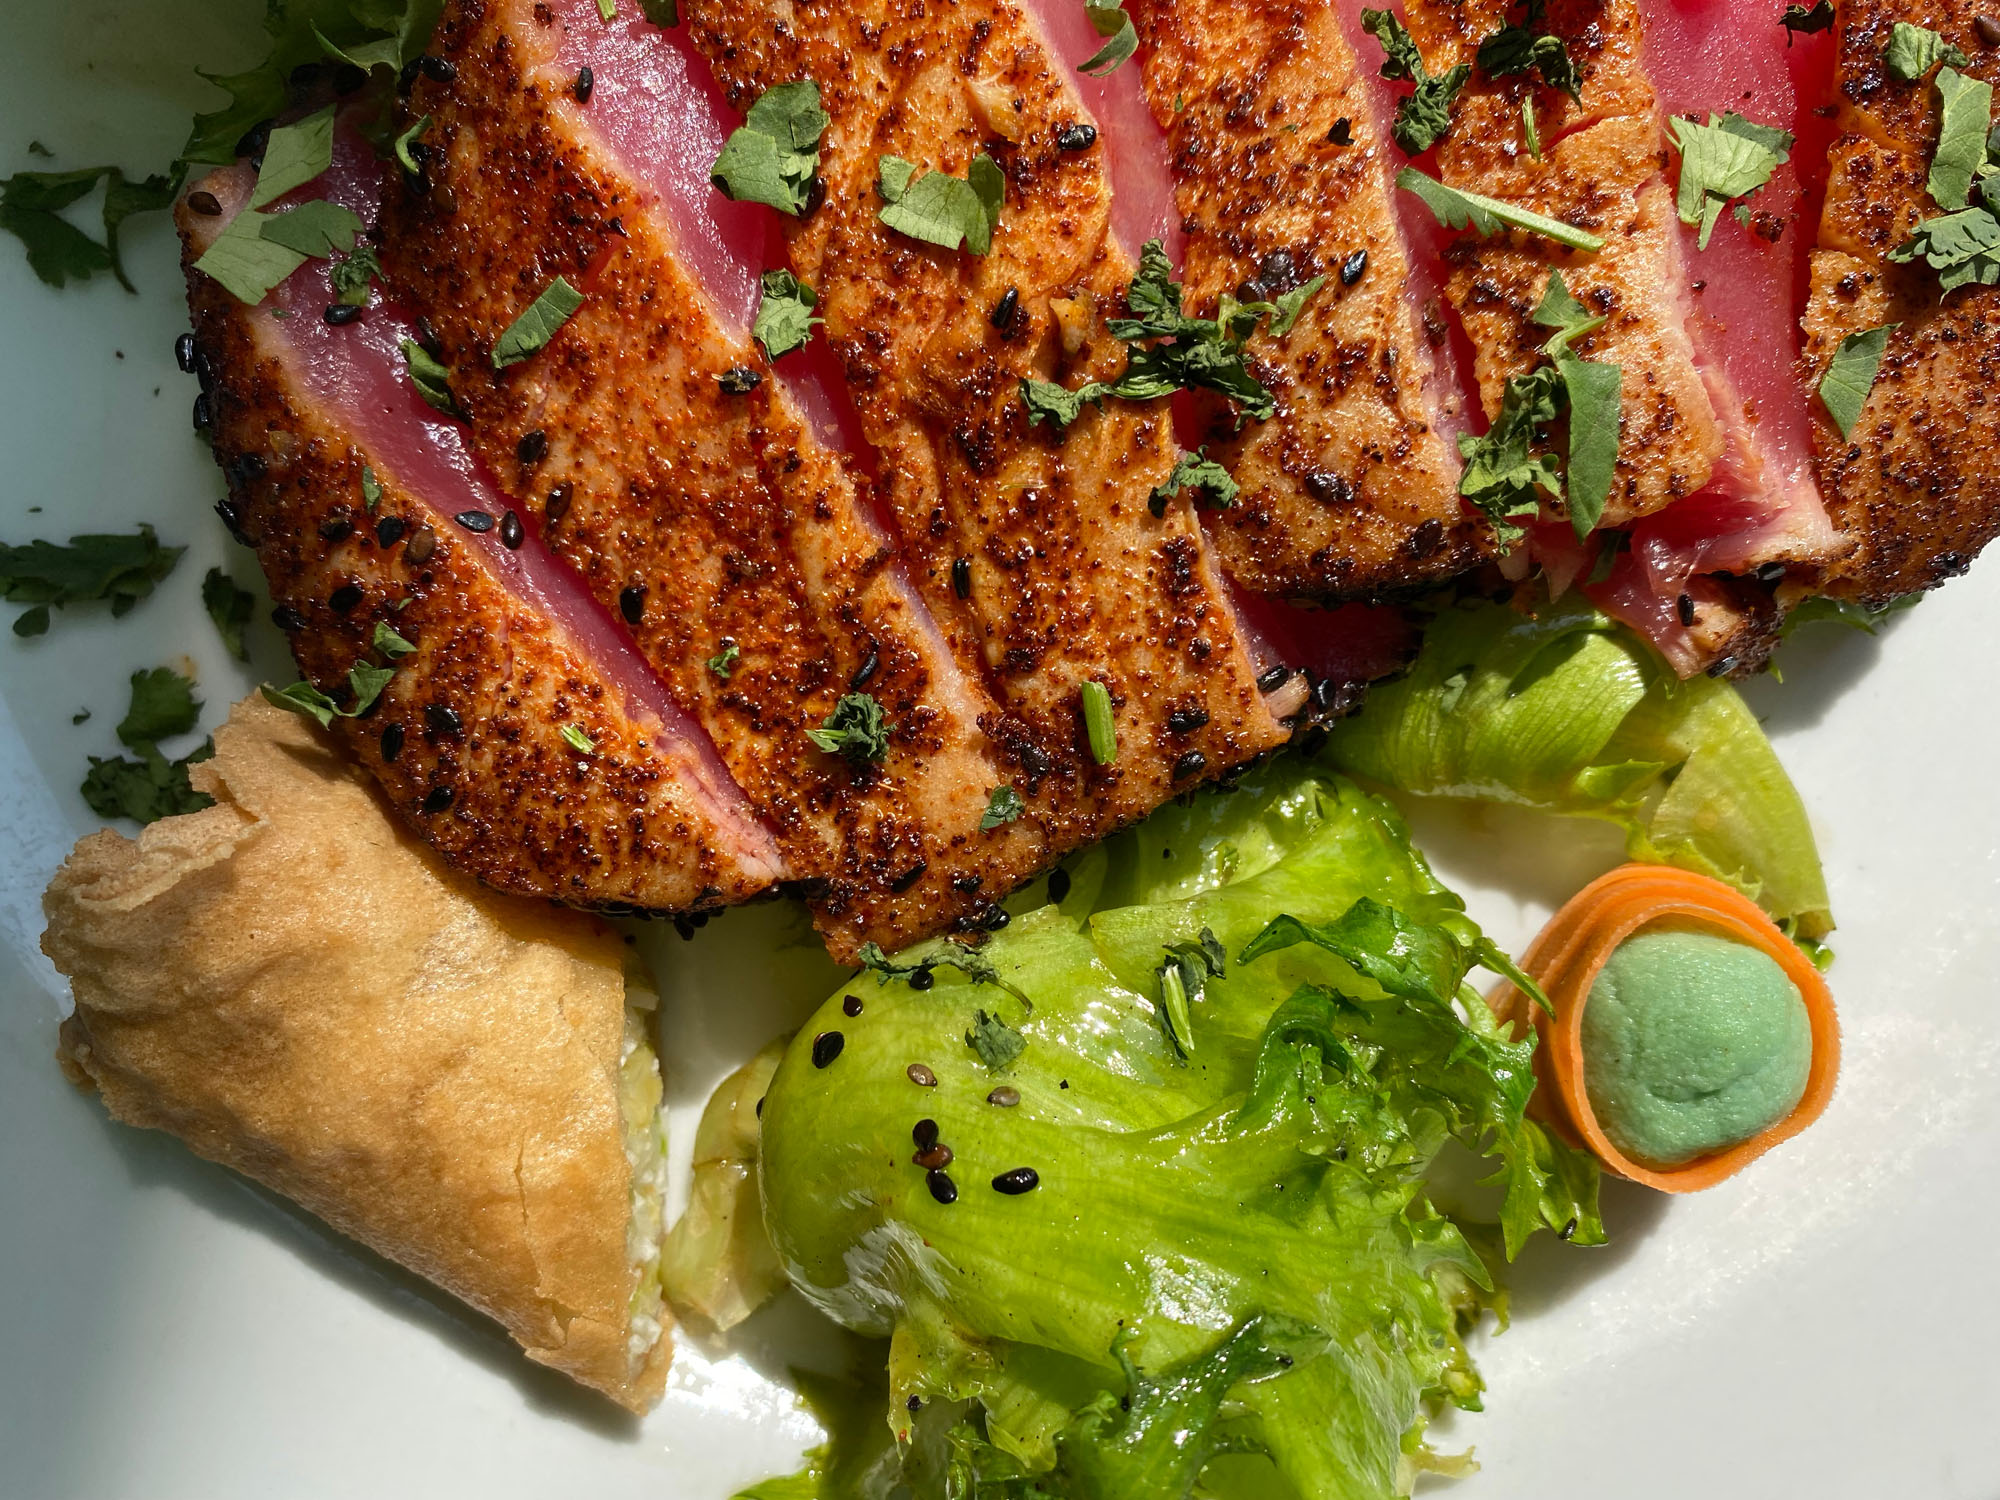 Ahi tuna, TrueHarvest crispy leaf lettuce, and a spring roll on a white plate.